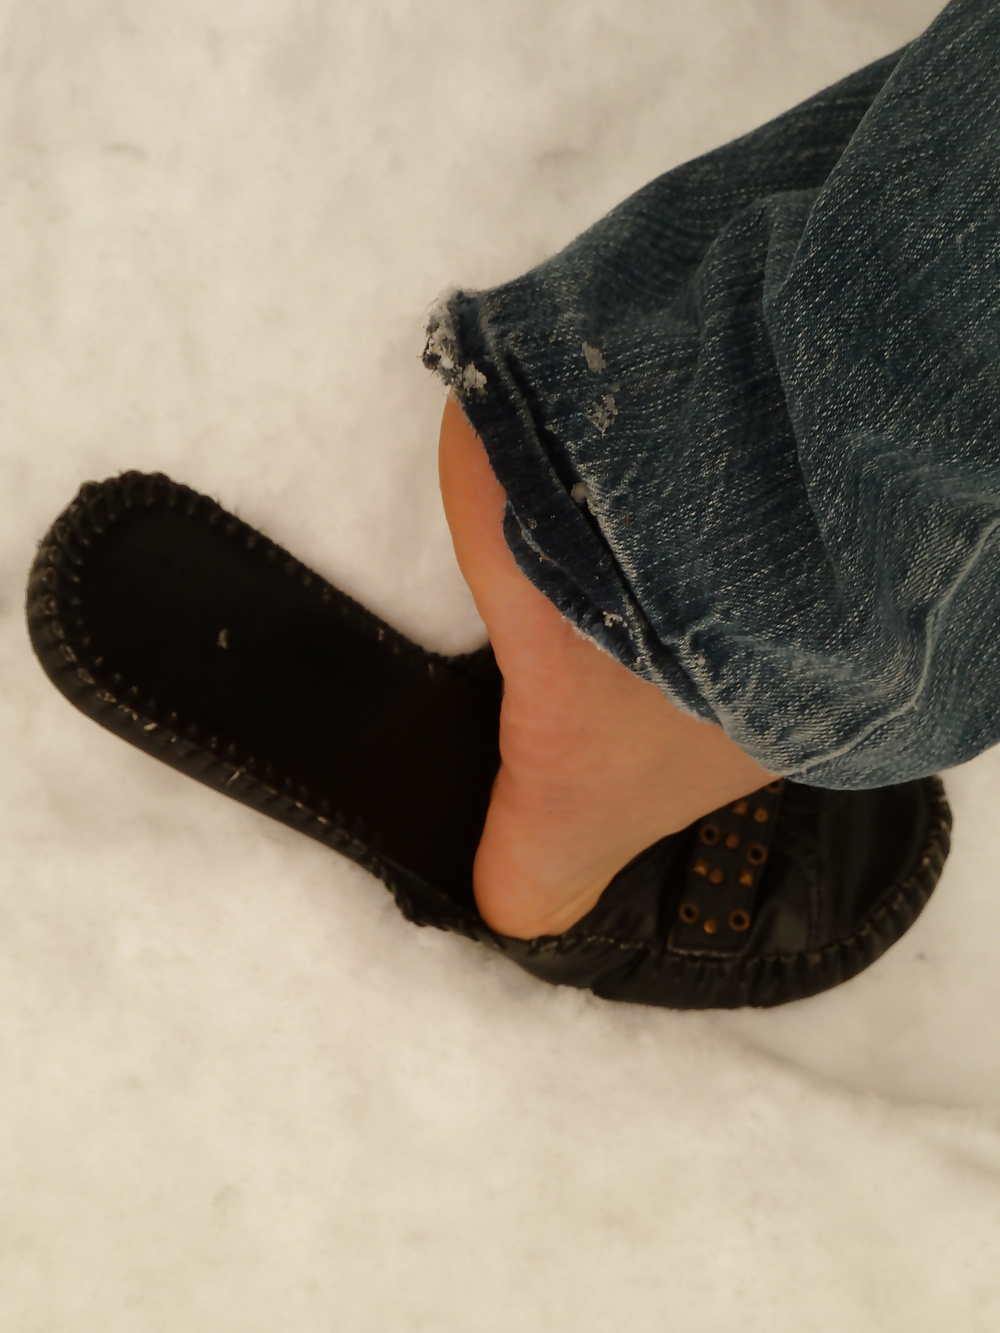 Feet in snow #8299012